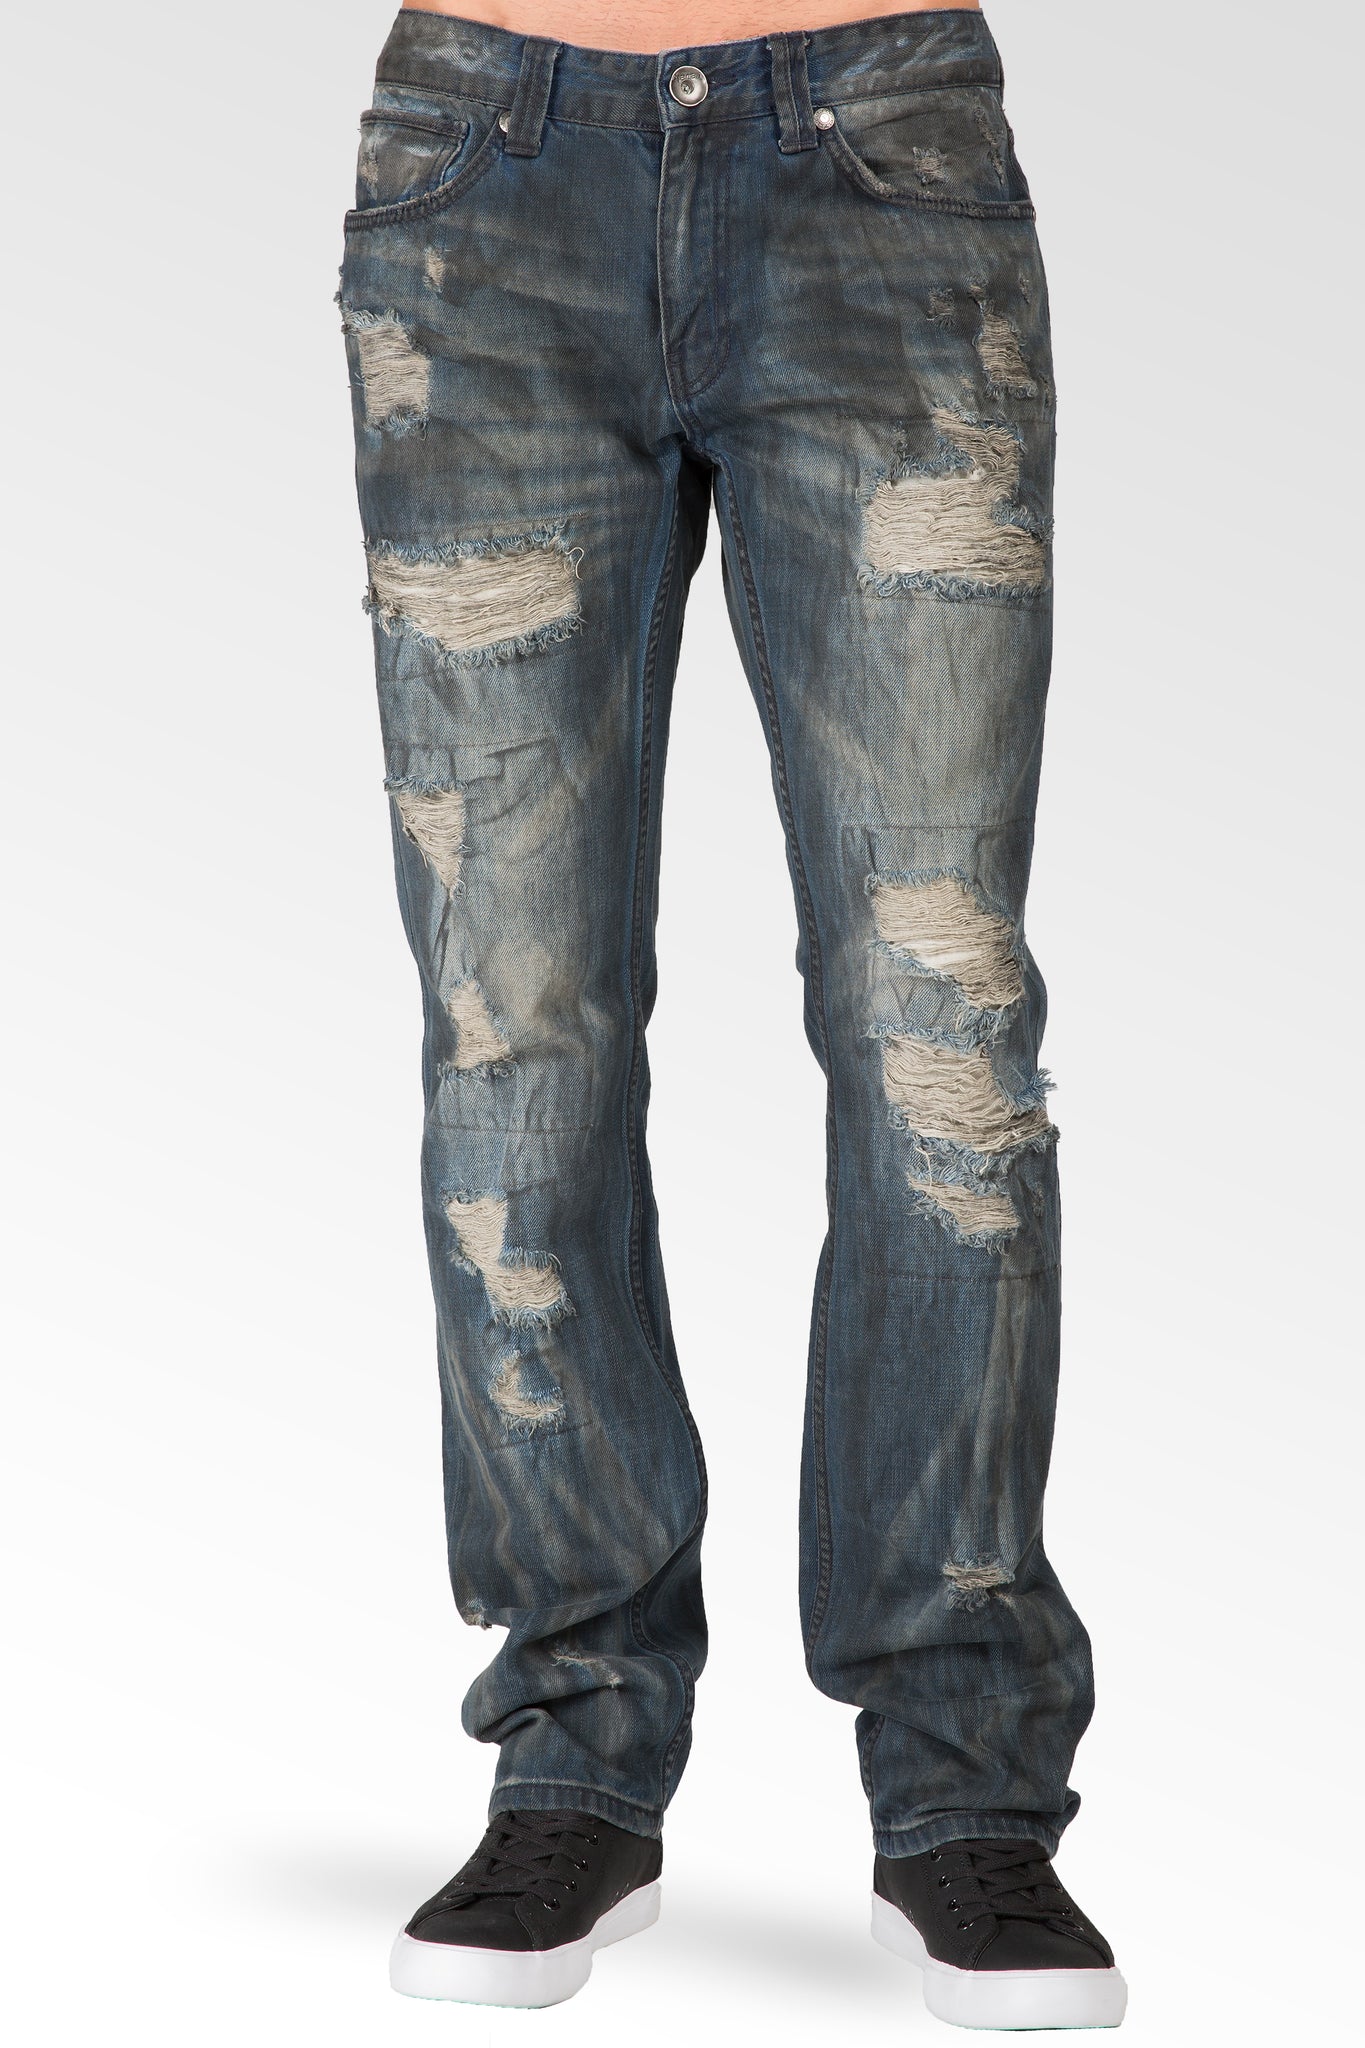 Slim Straight Premium Denim Black Paint Brushed Dark Blue Jeans Destroyed & Mended